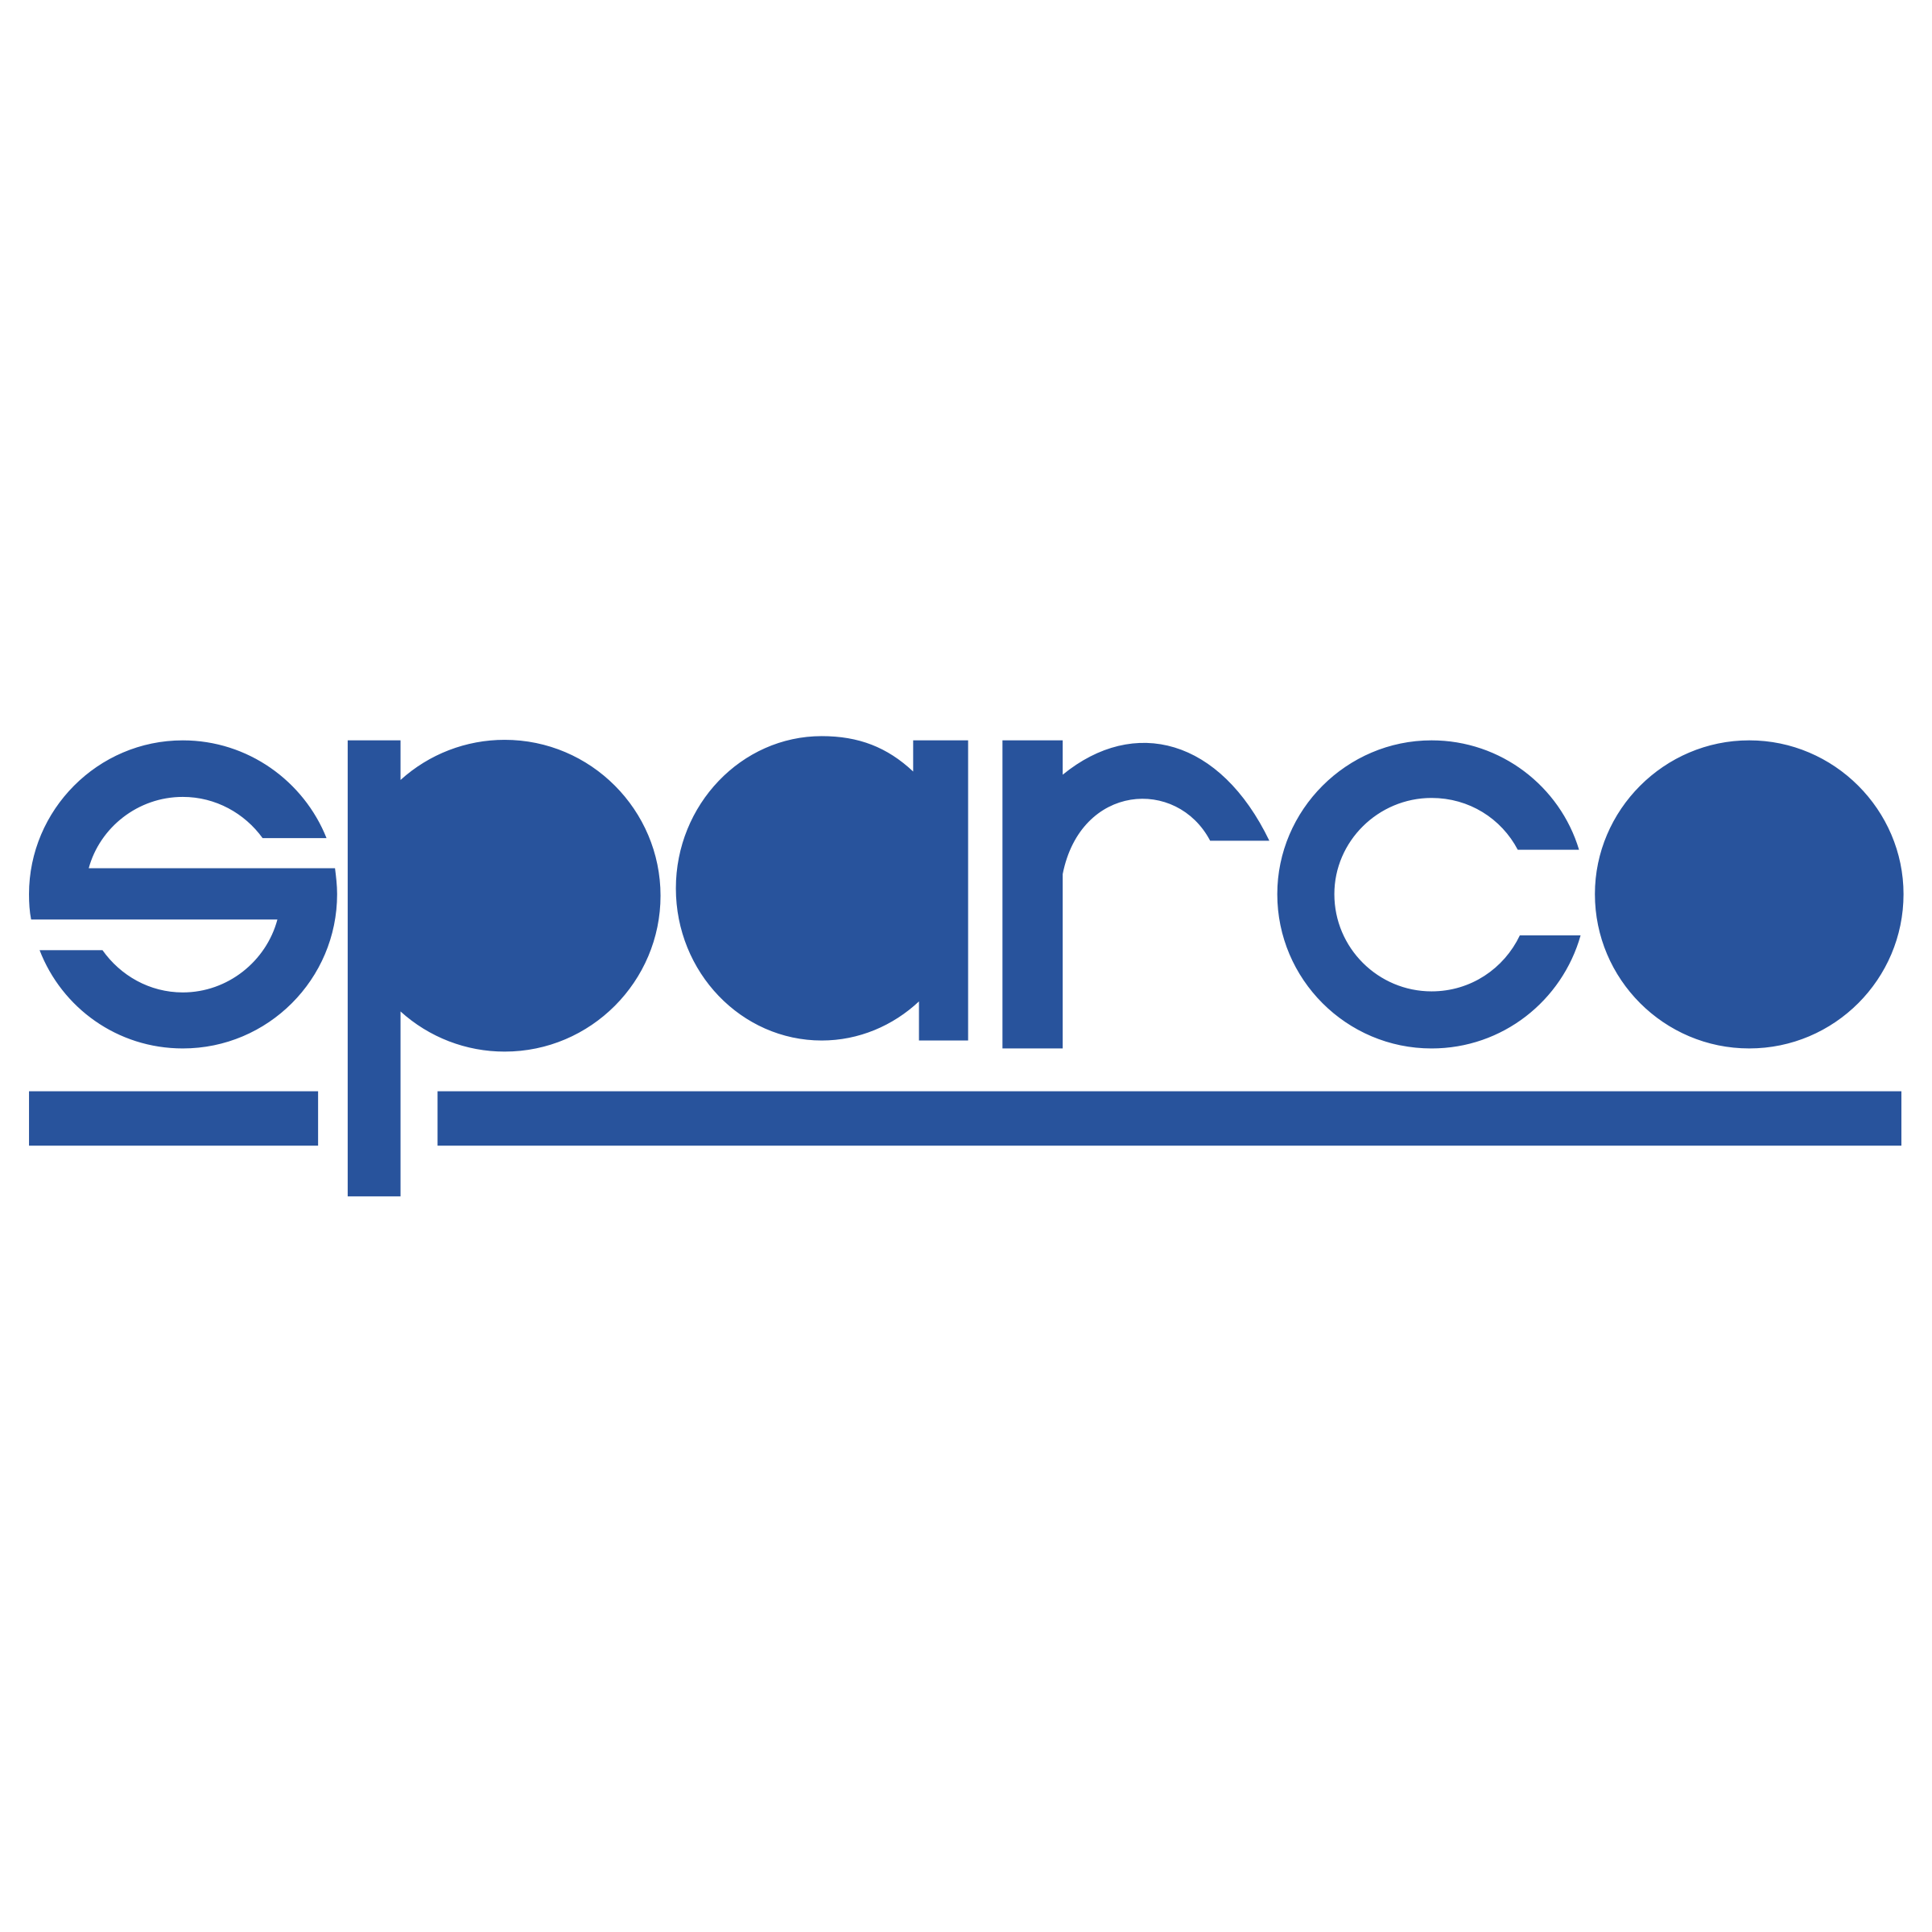 Sparco Logo - Sparco Logo PNG Transparent & SVG Vector - Freebie Supply